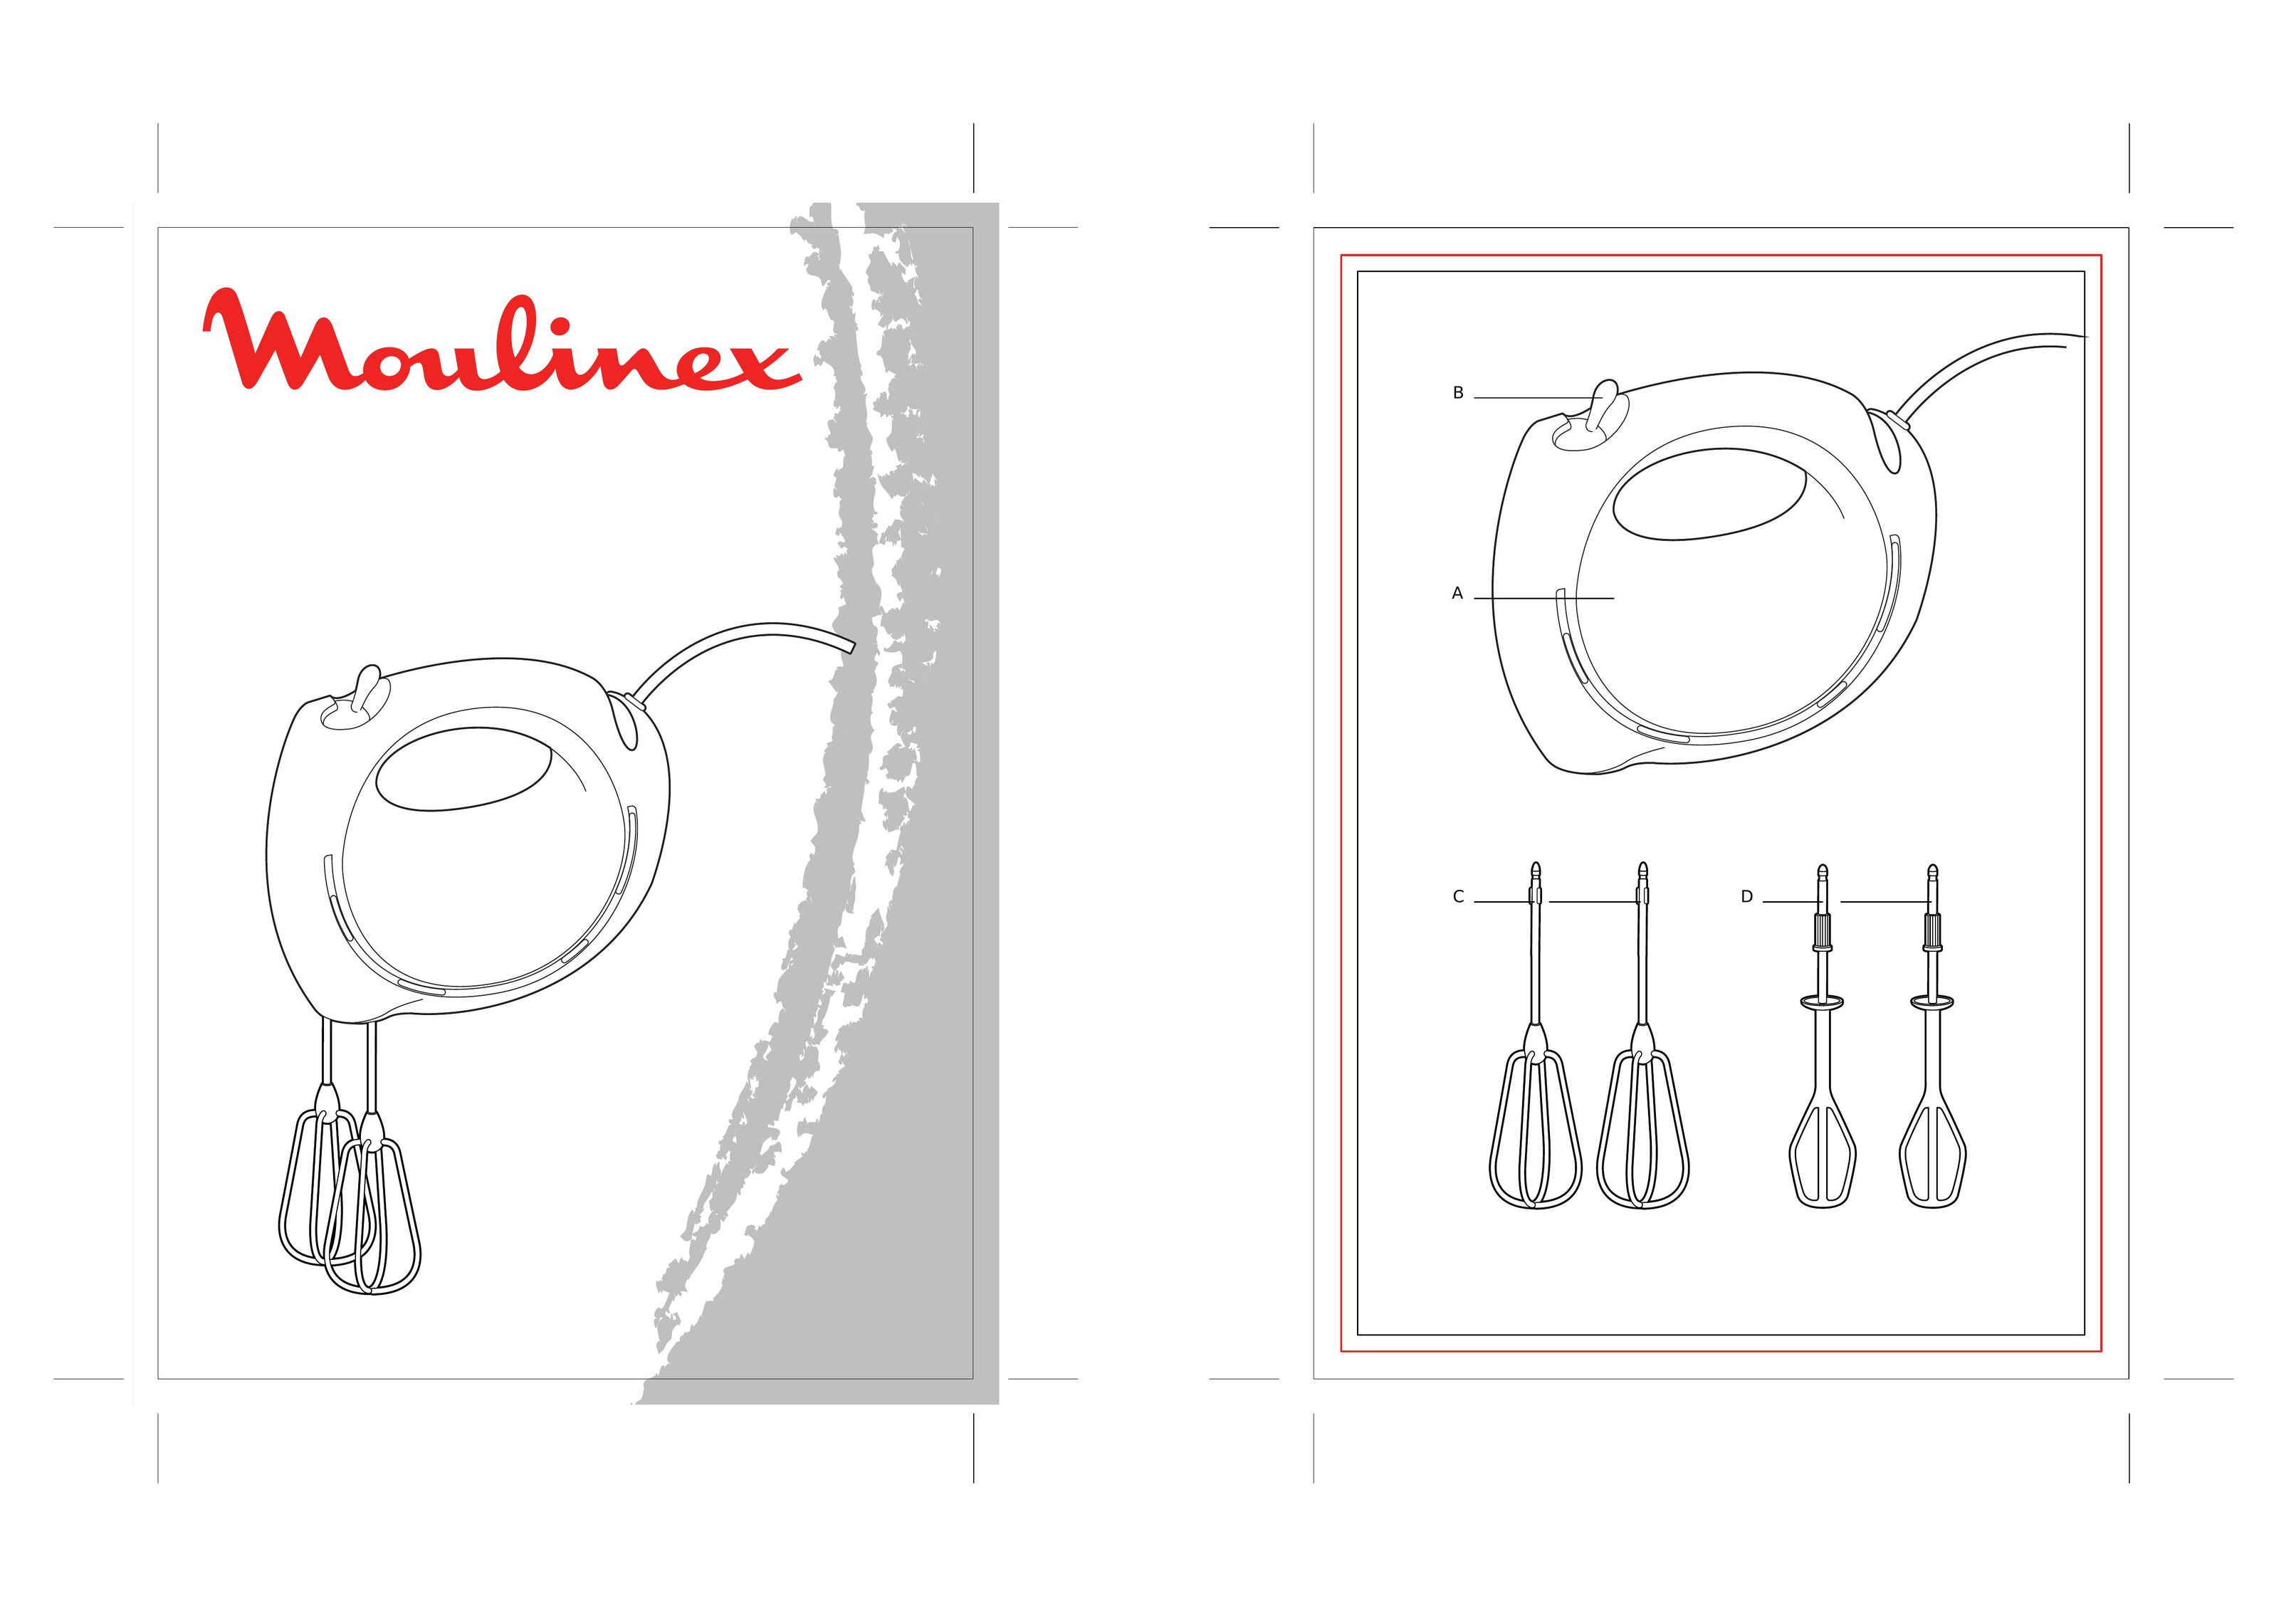 Moulinex hand-mixer Mixer User Manual